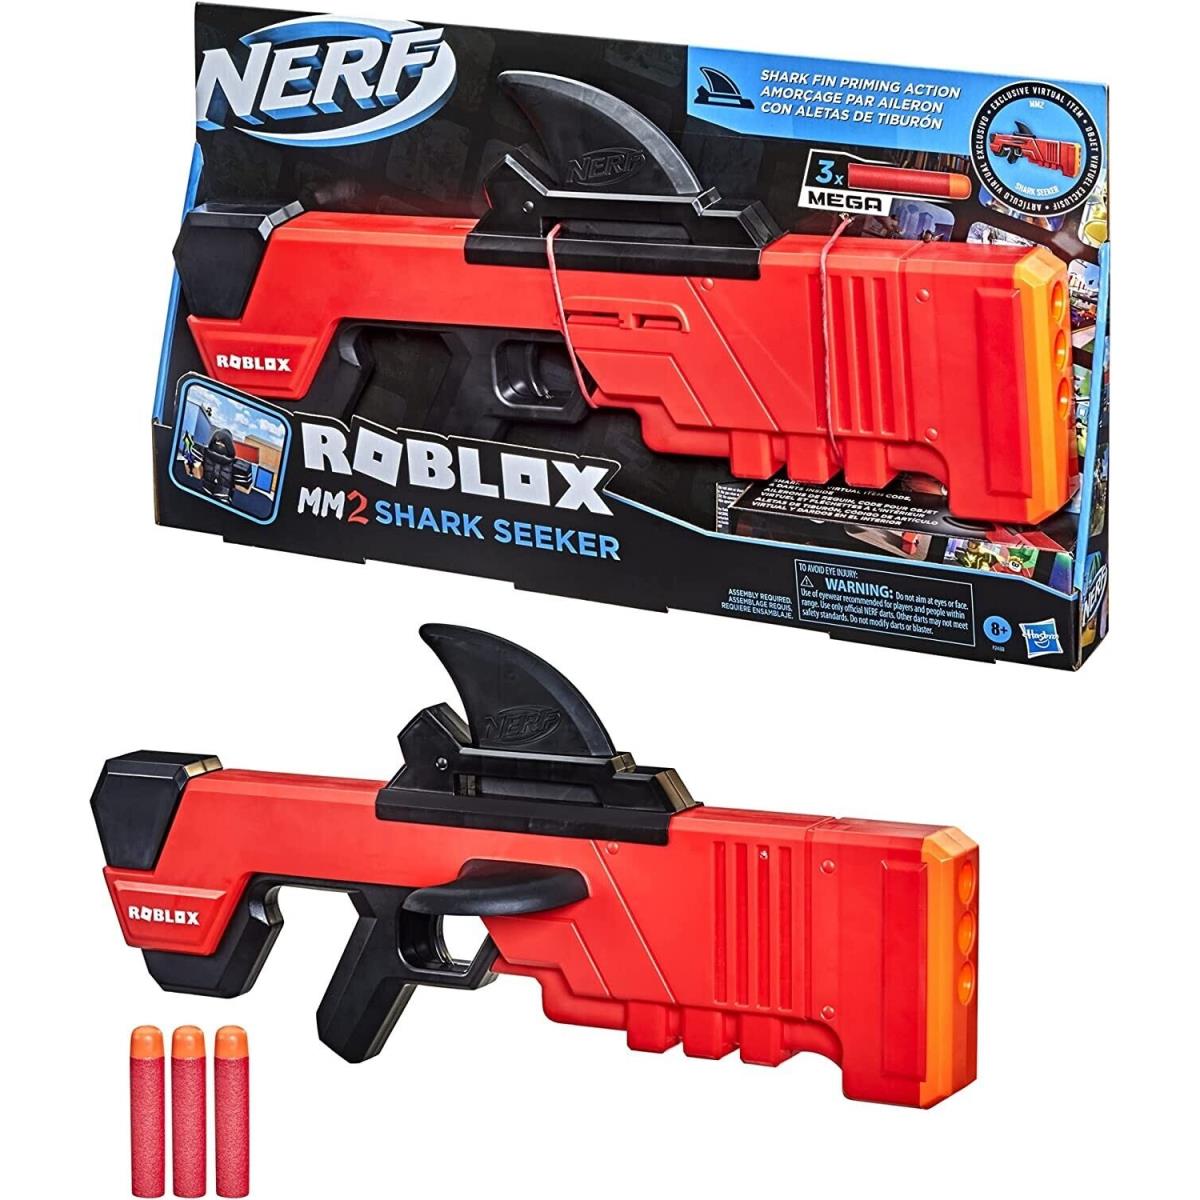 Hasbro Nerf Roblox MM2 Shark Seeker Dart Blaster Shark-fin Priming Virtual Item Toys